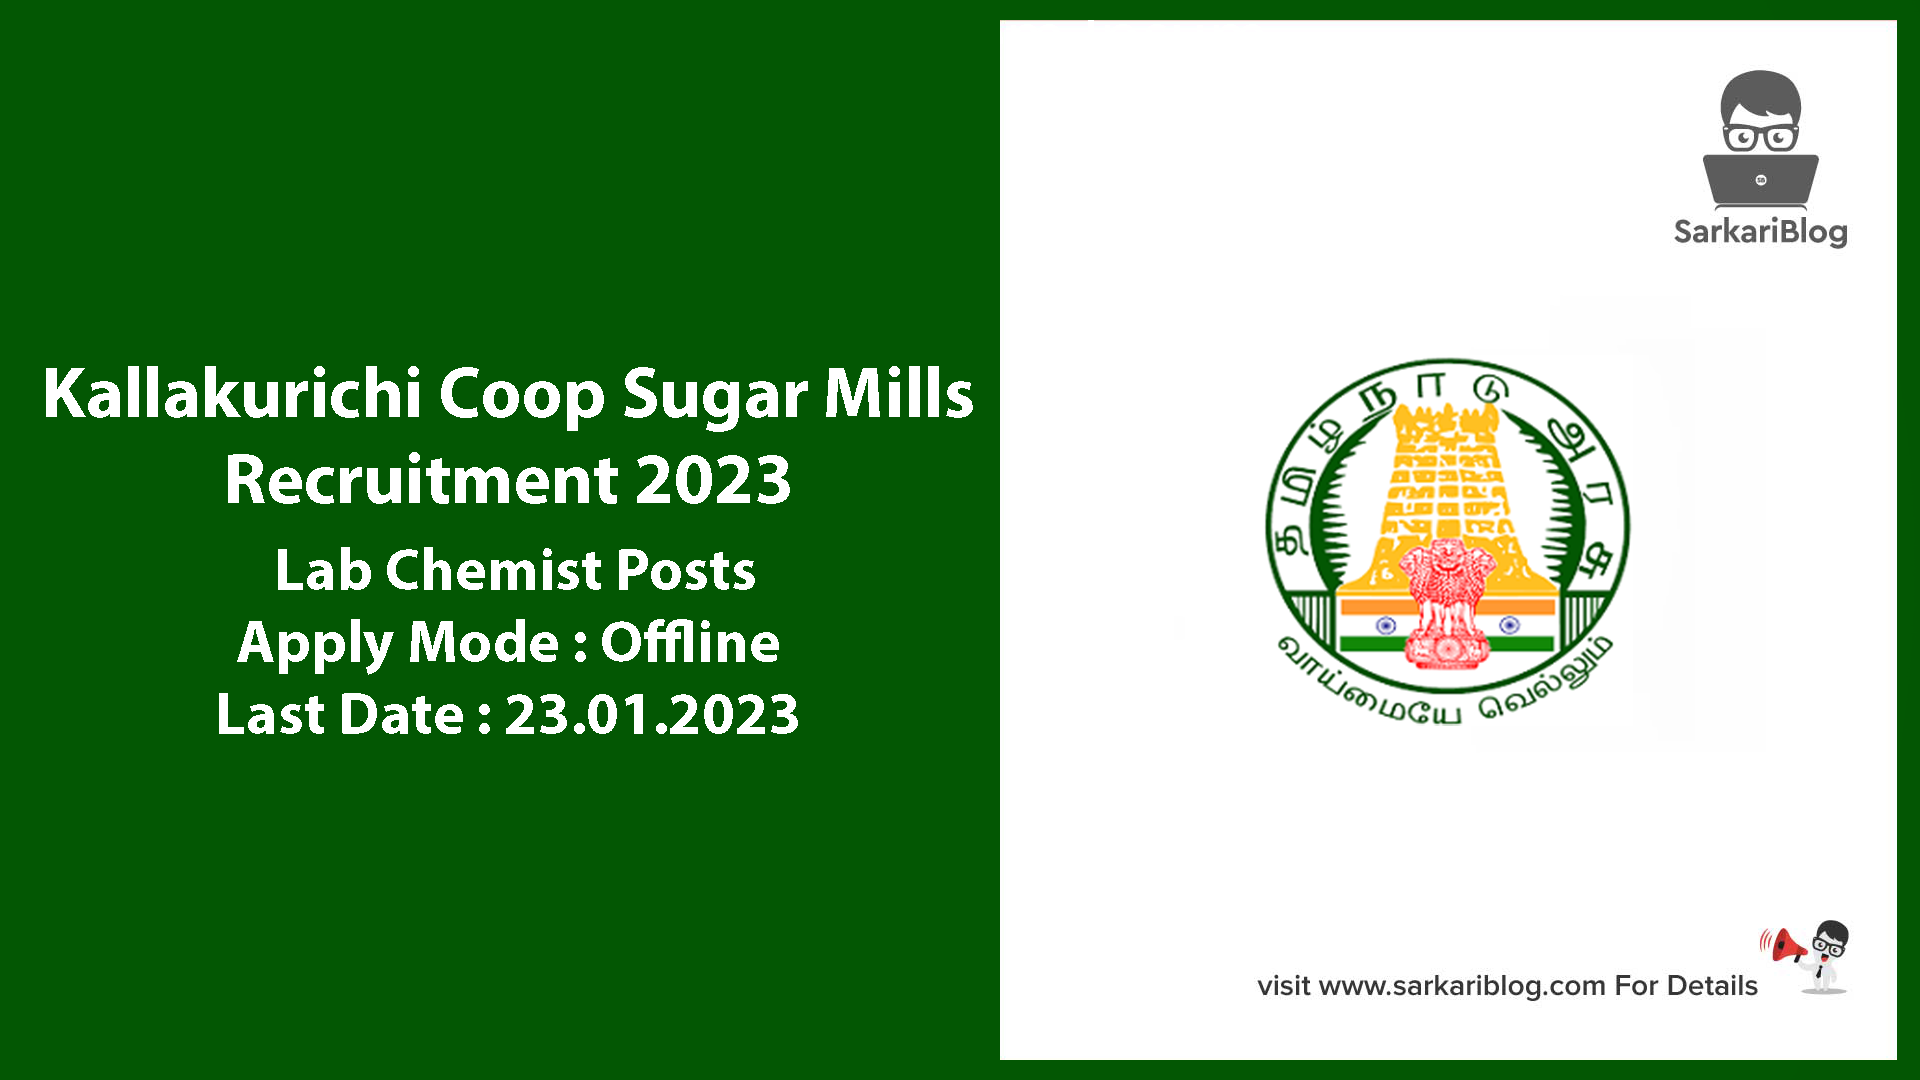 Kallakurichi Coop Sugar Mills Recruitment 2023